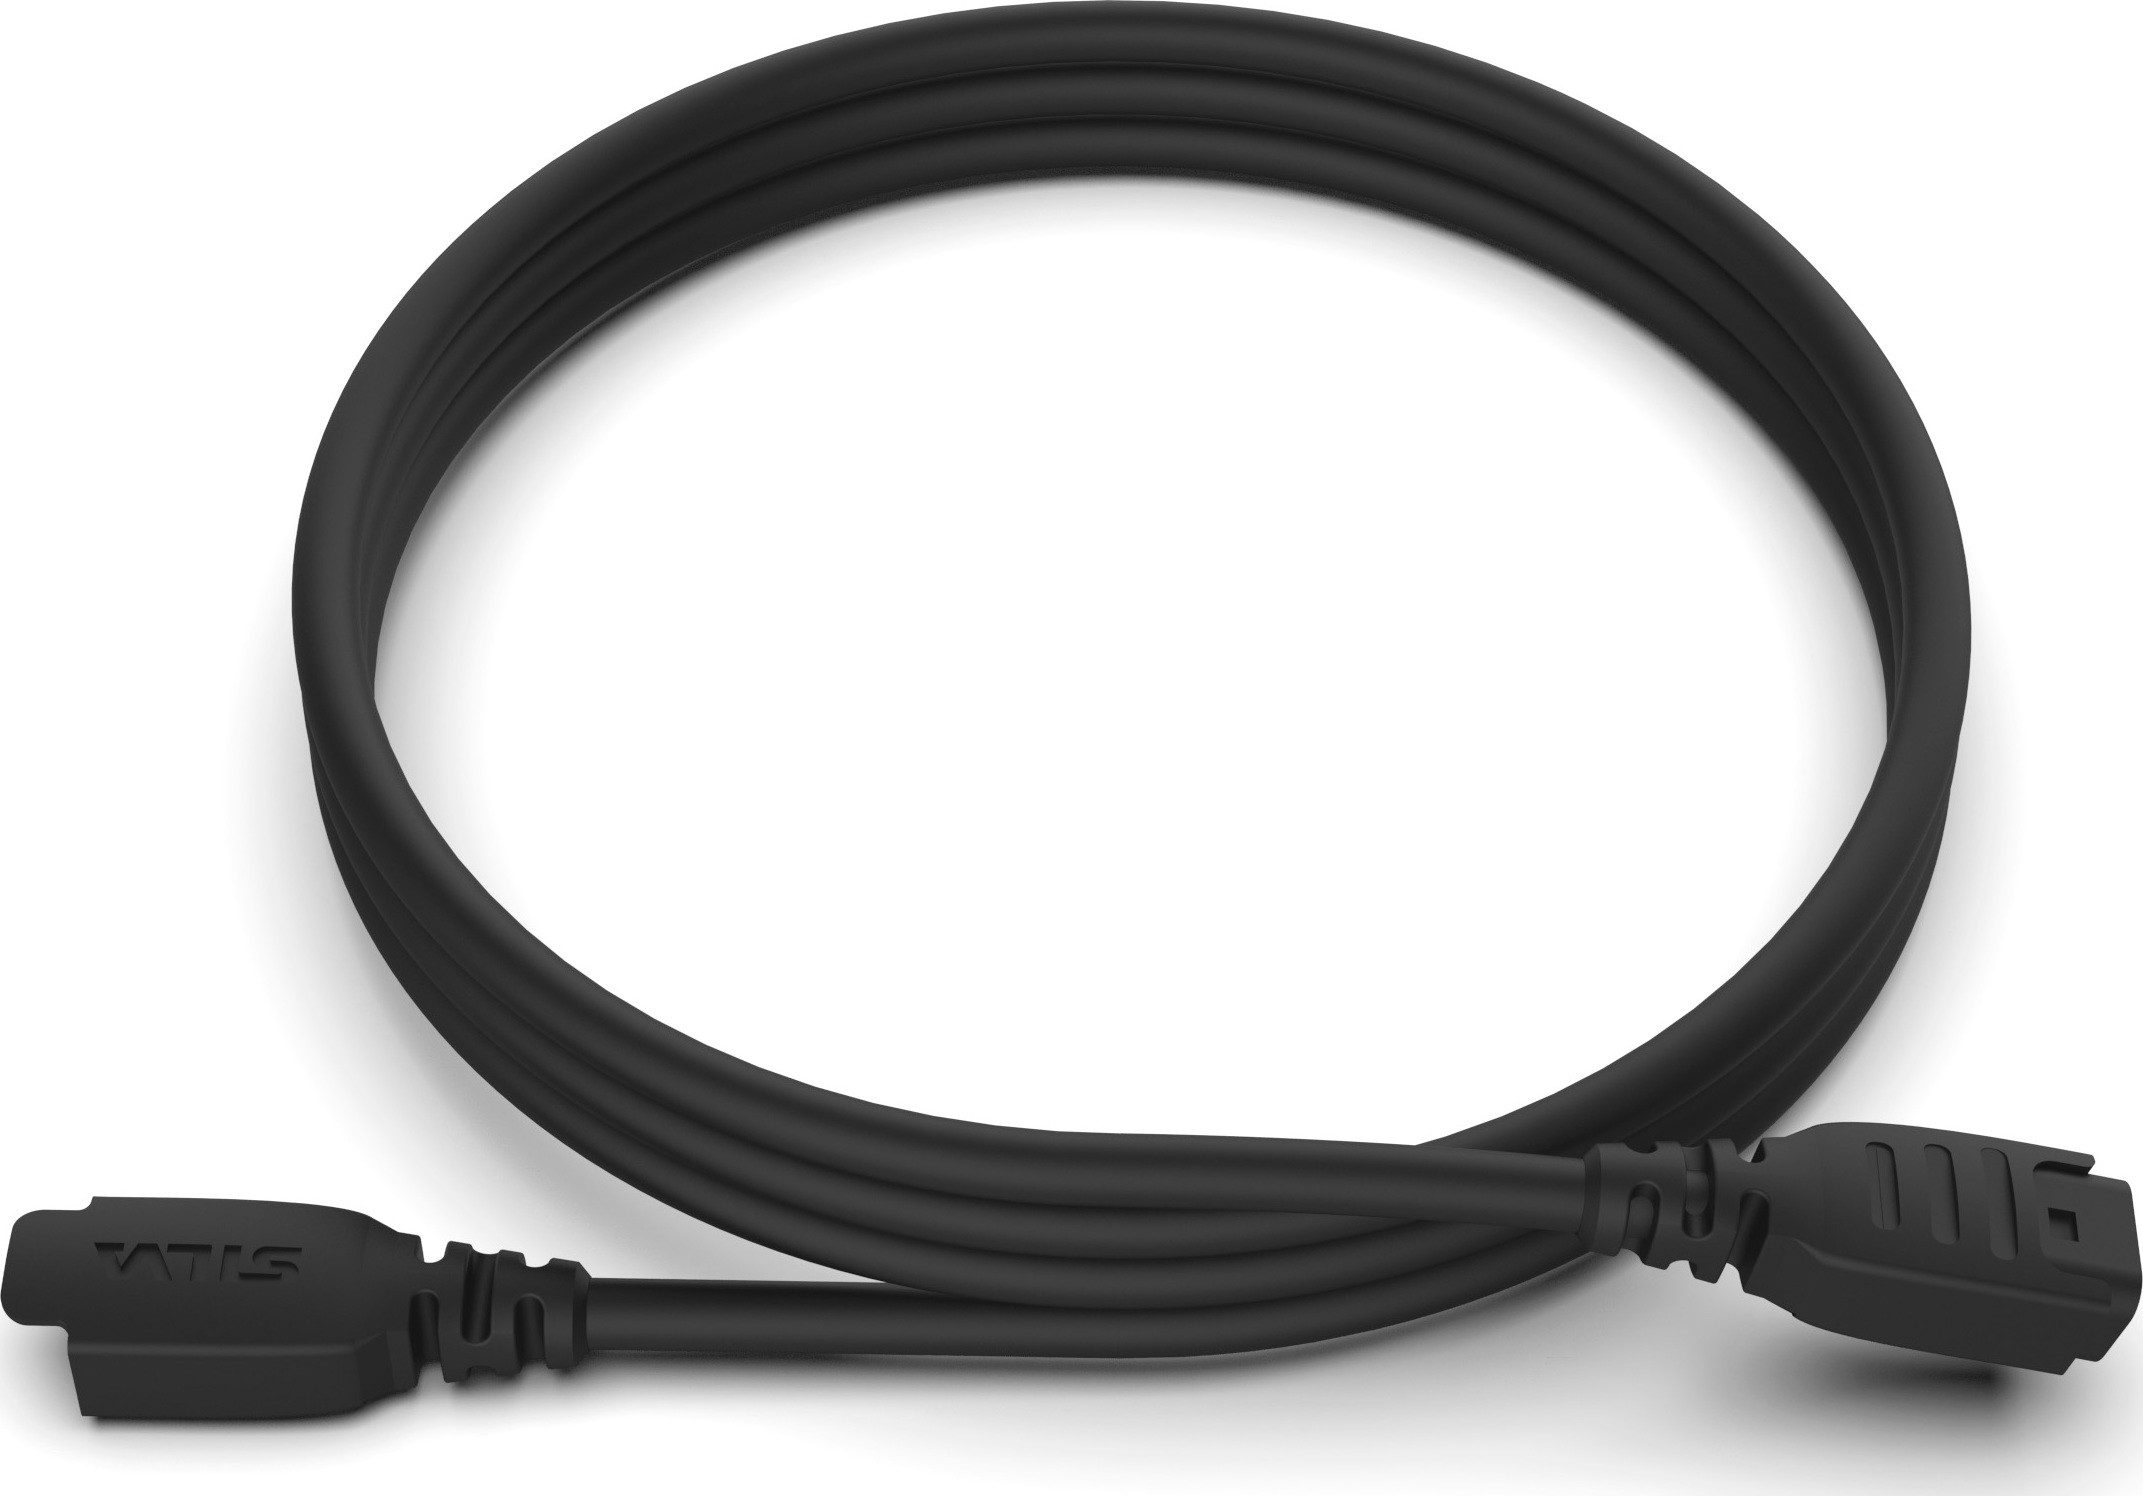 Silva Silva Spectra Extension Cable Nocolour No Size, Nocolour